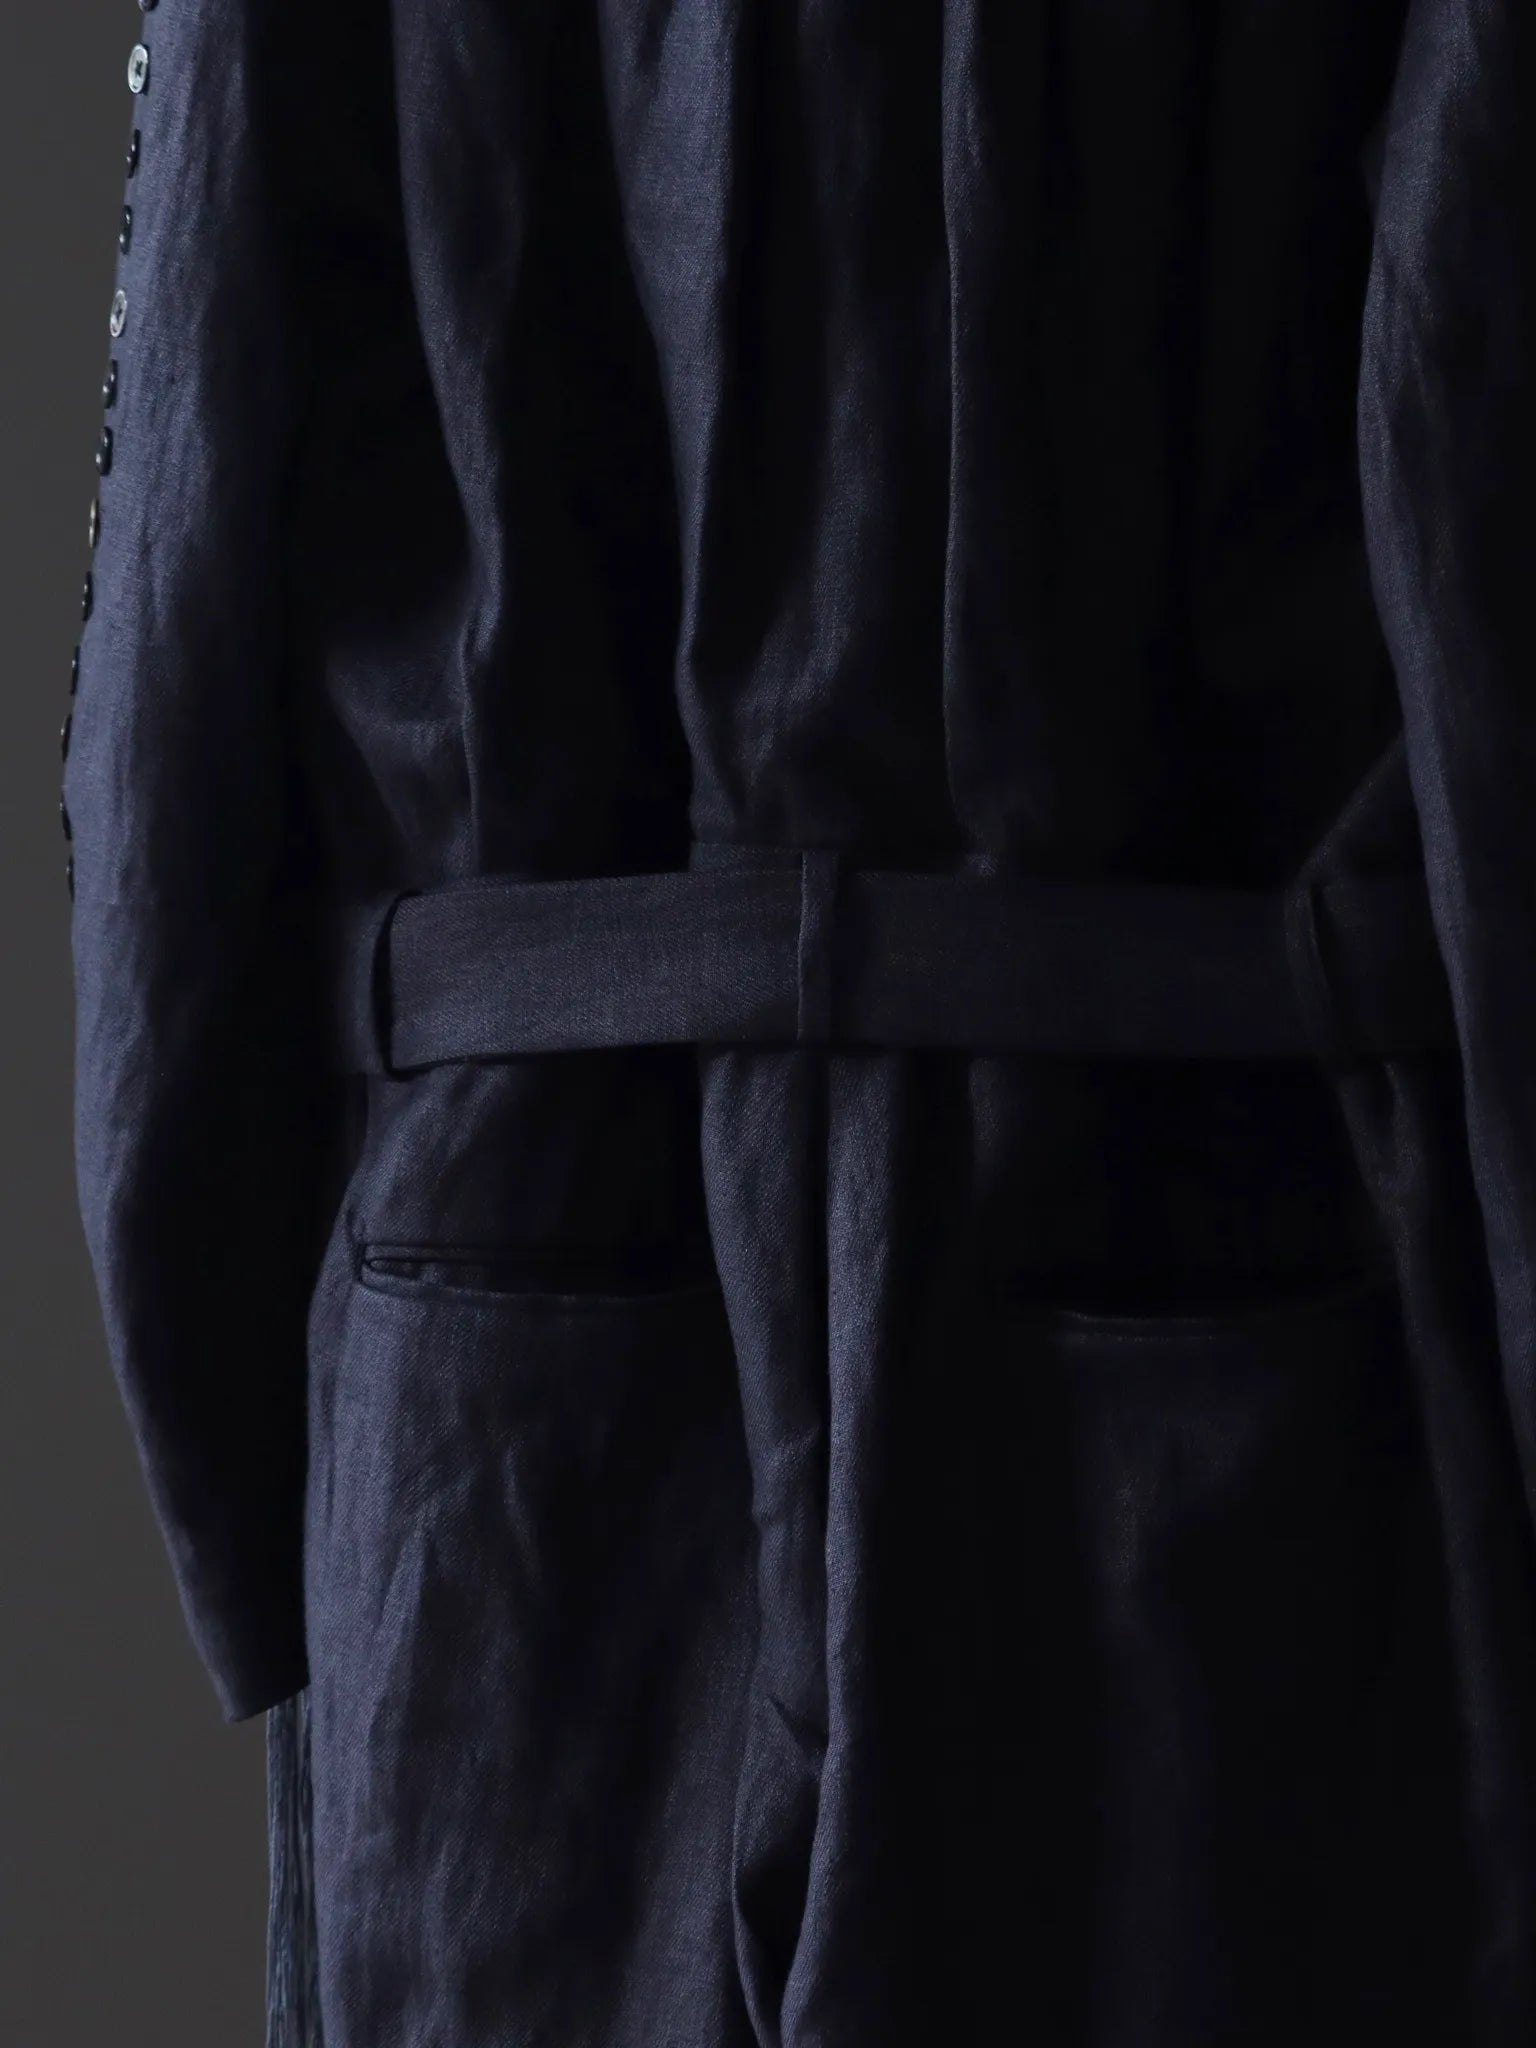 midorikawa-button-linen-jump-suits-charcoal-gray-7